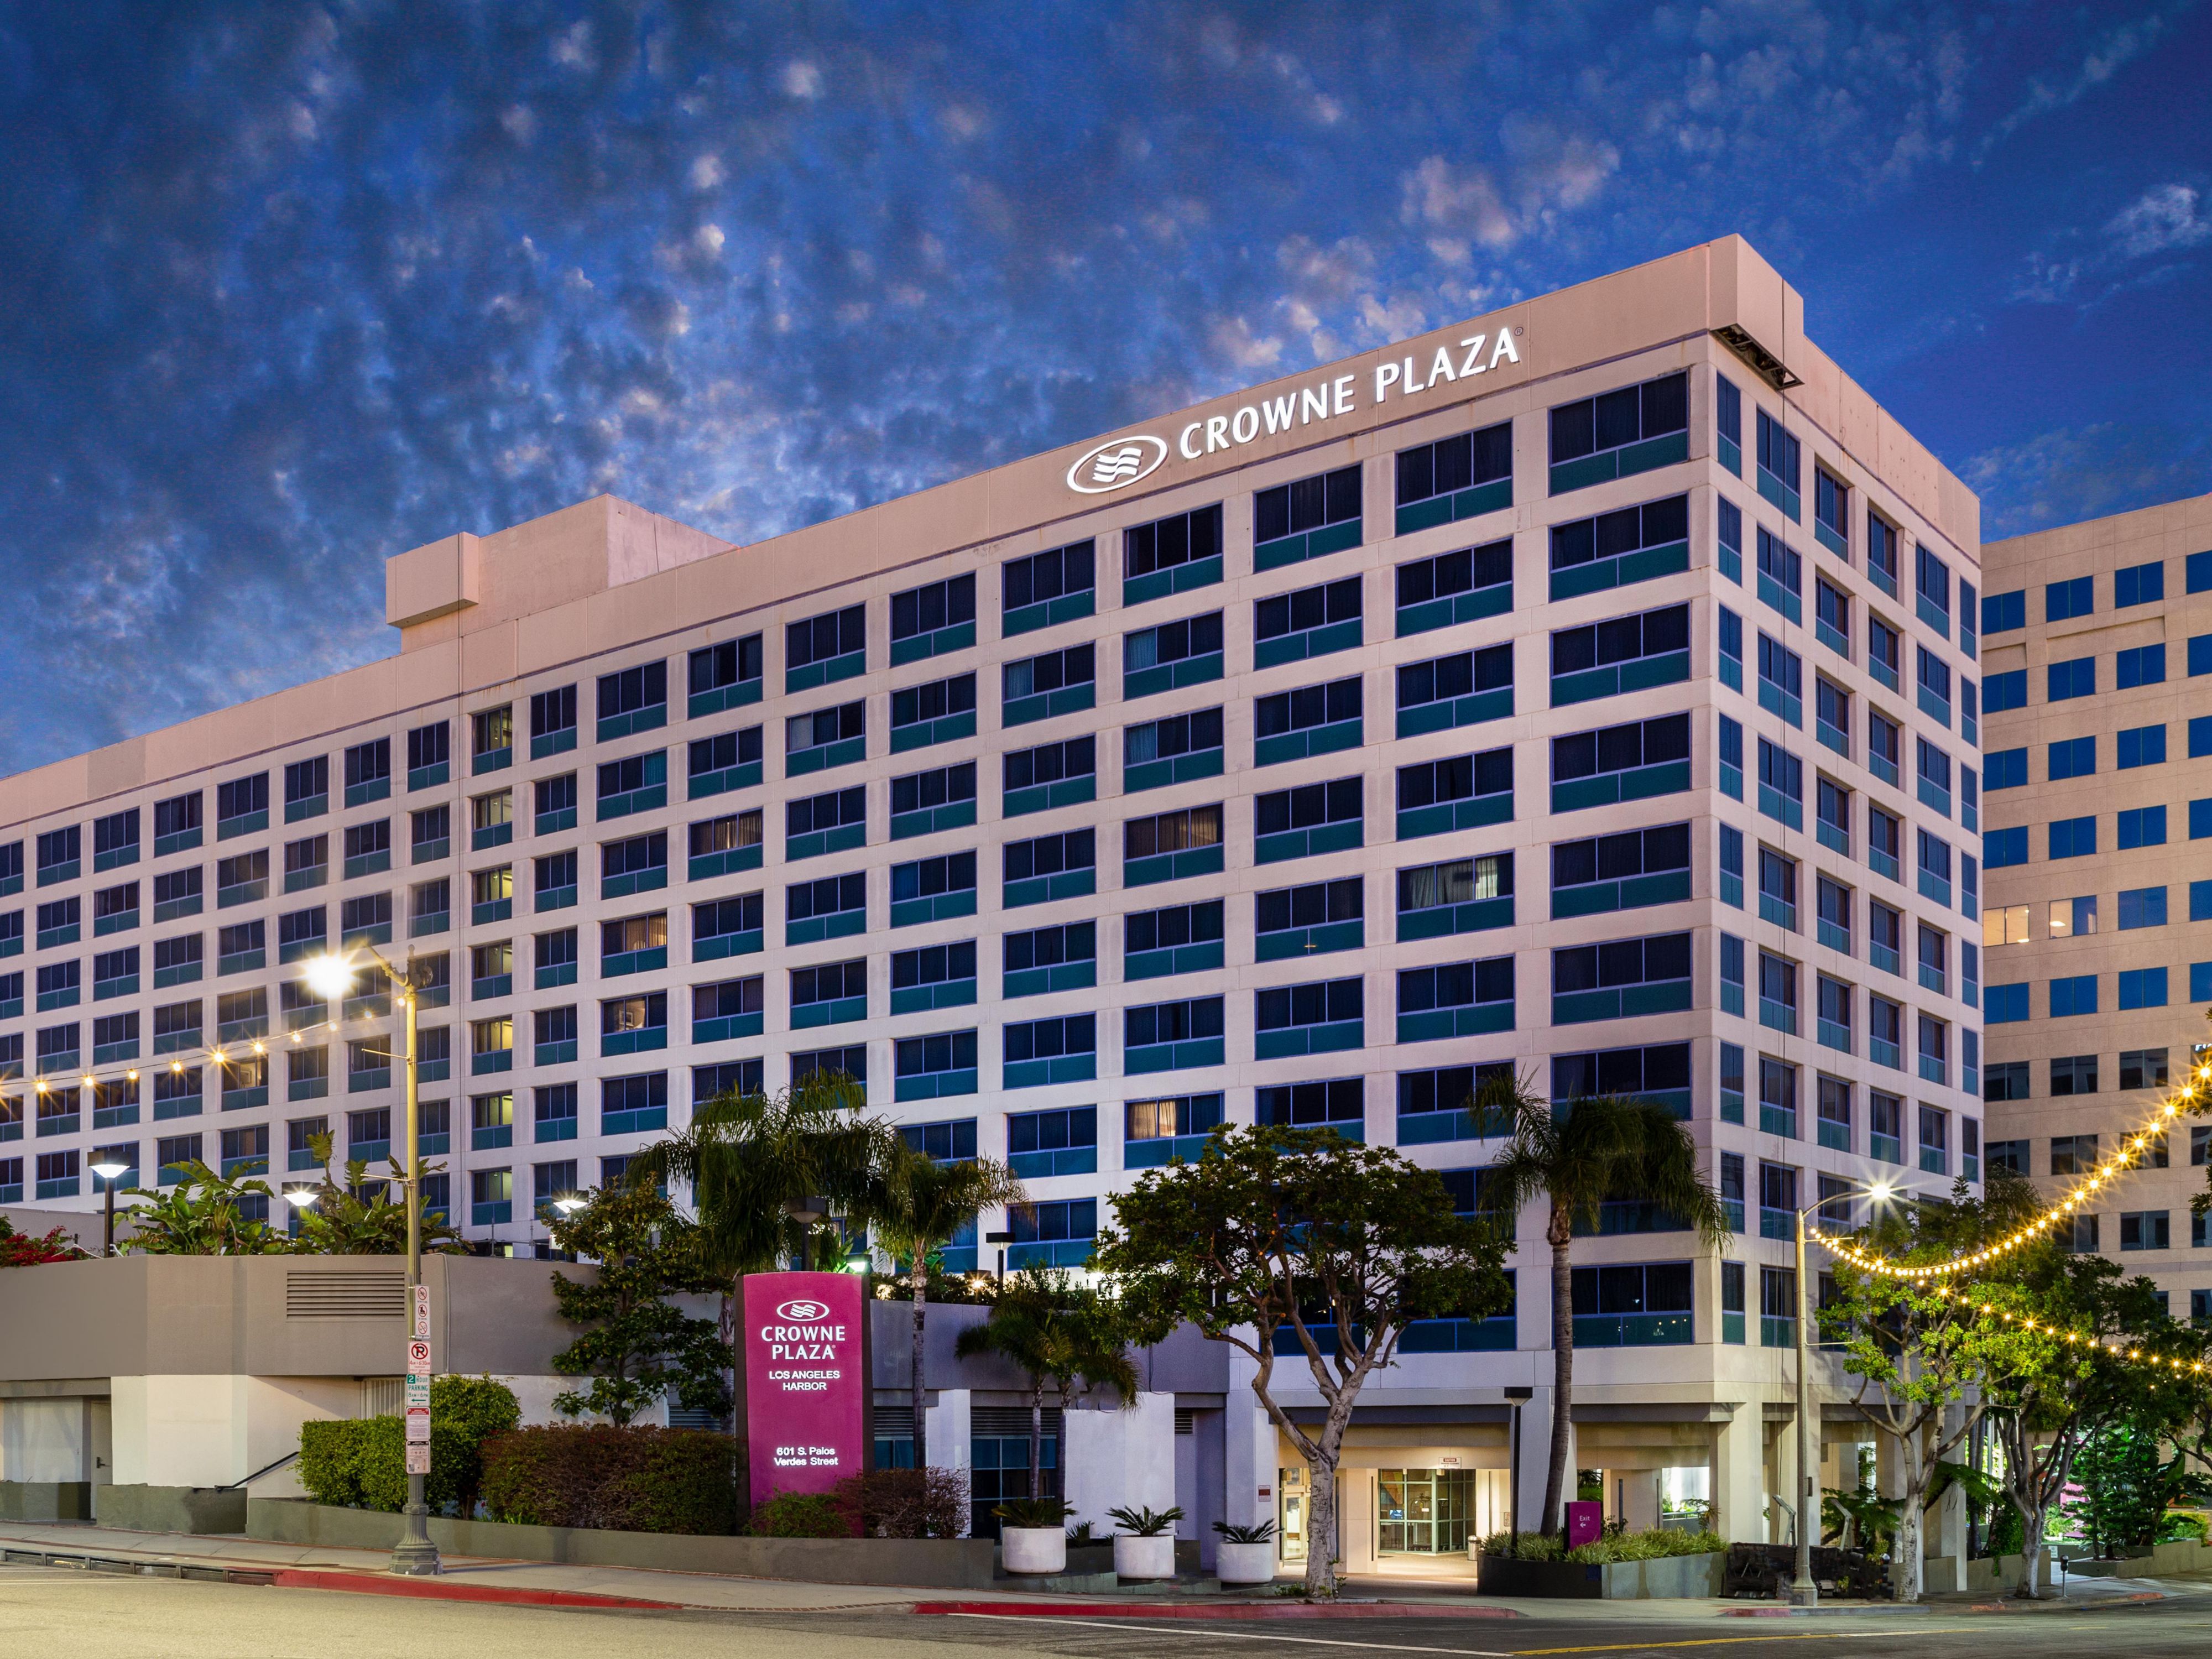 Los Angeles Hotels  Top 37 Hotels in Los Angeles, California by IHG